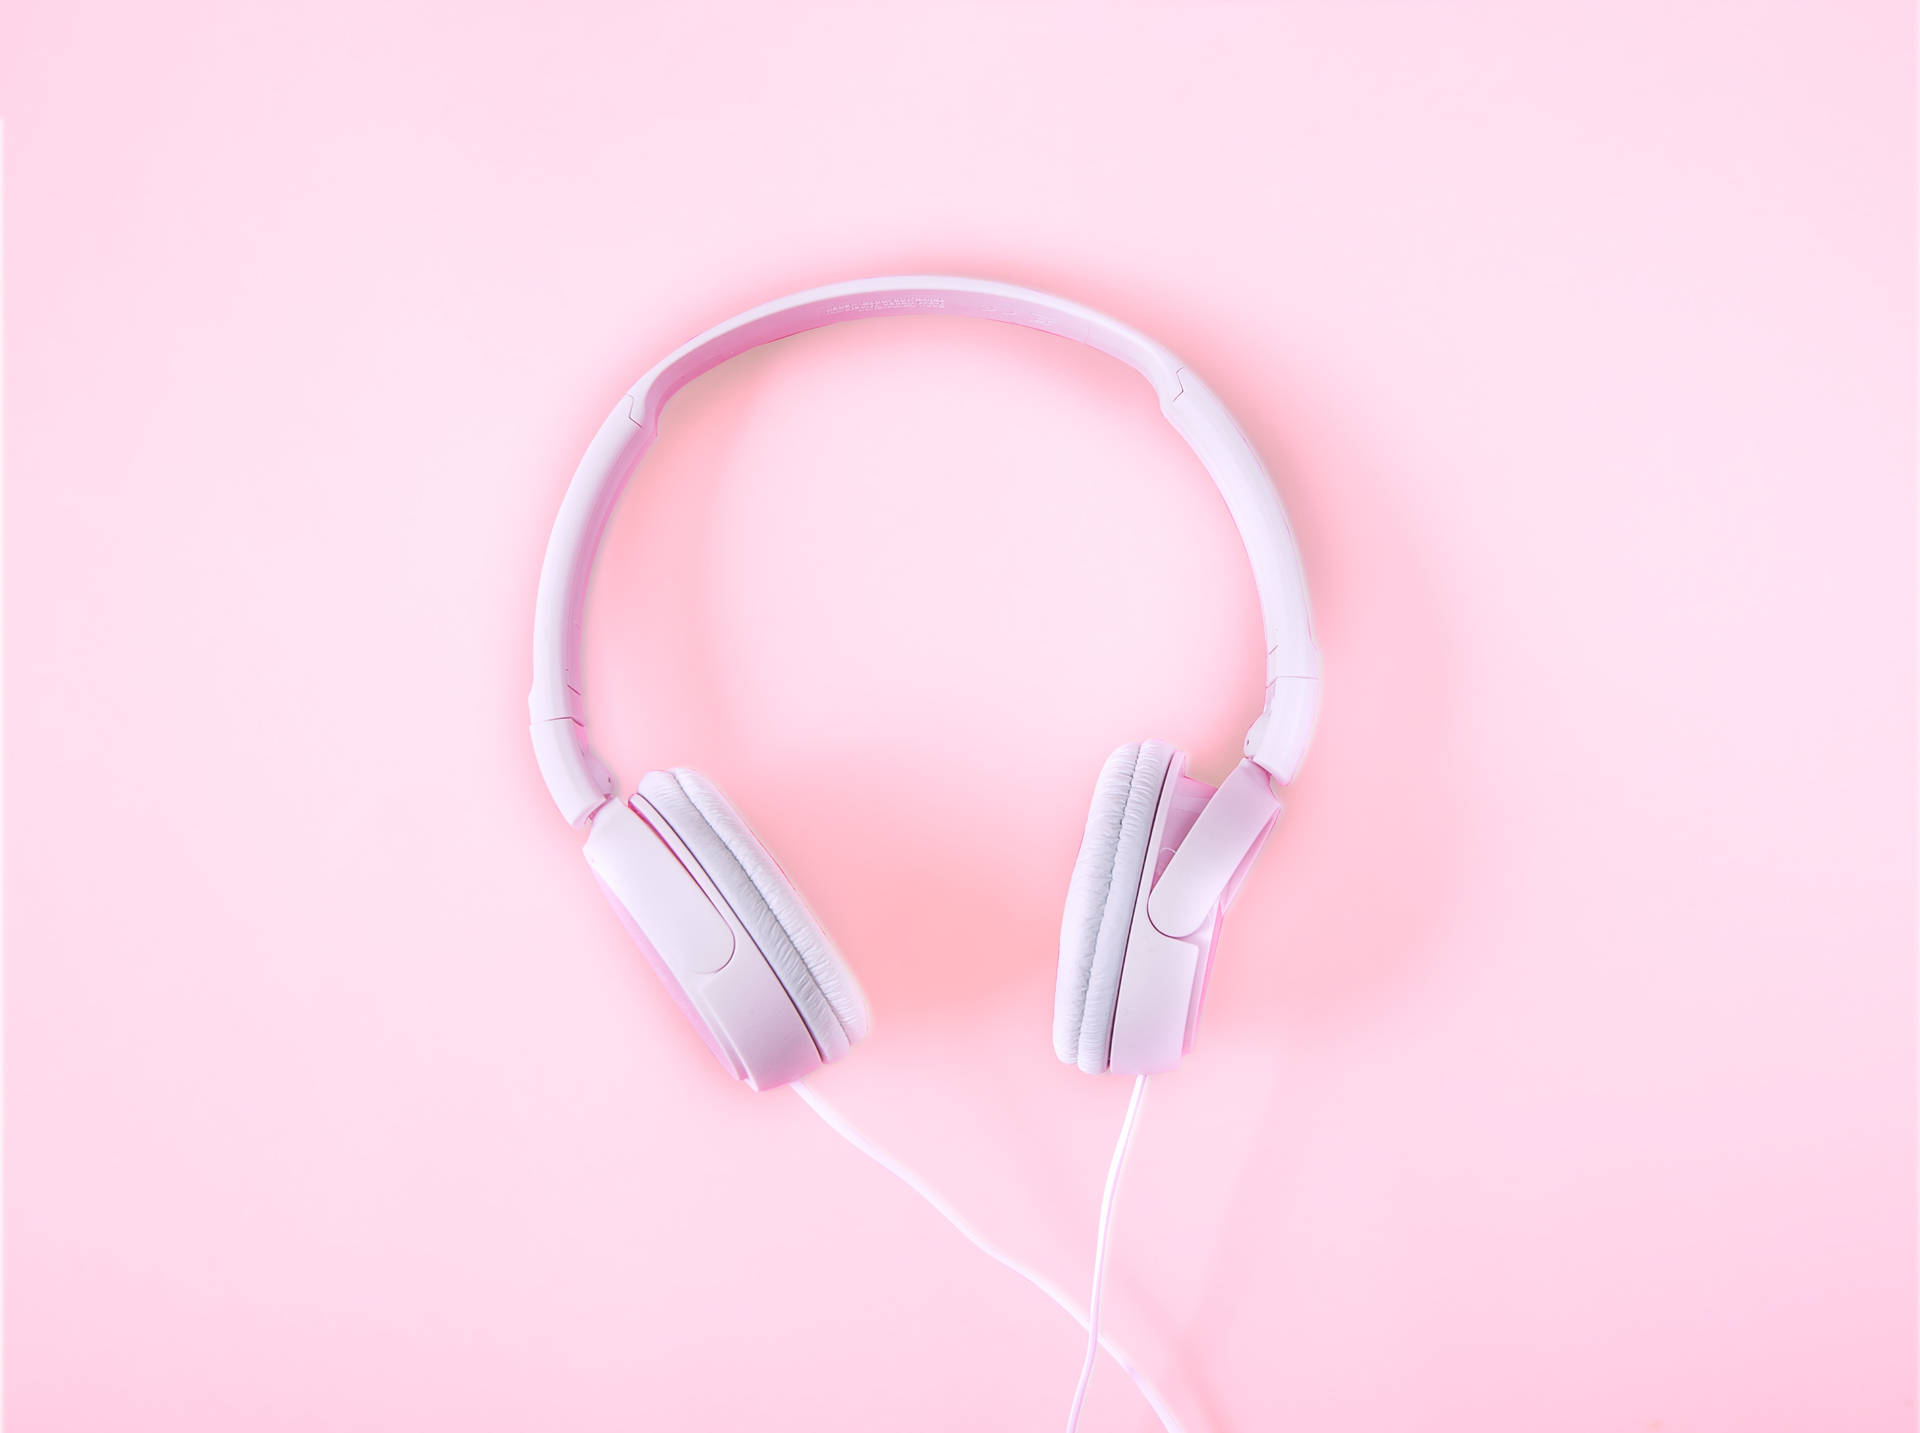 Aesthetic Minimalist Pink Headphone Background